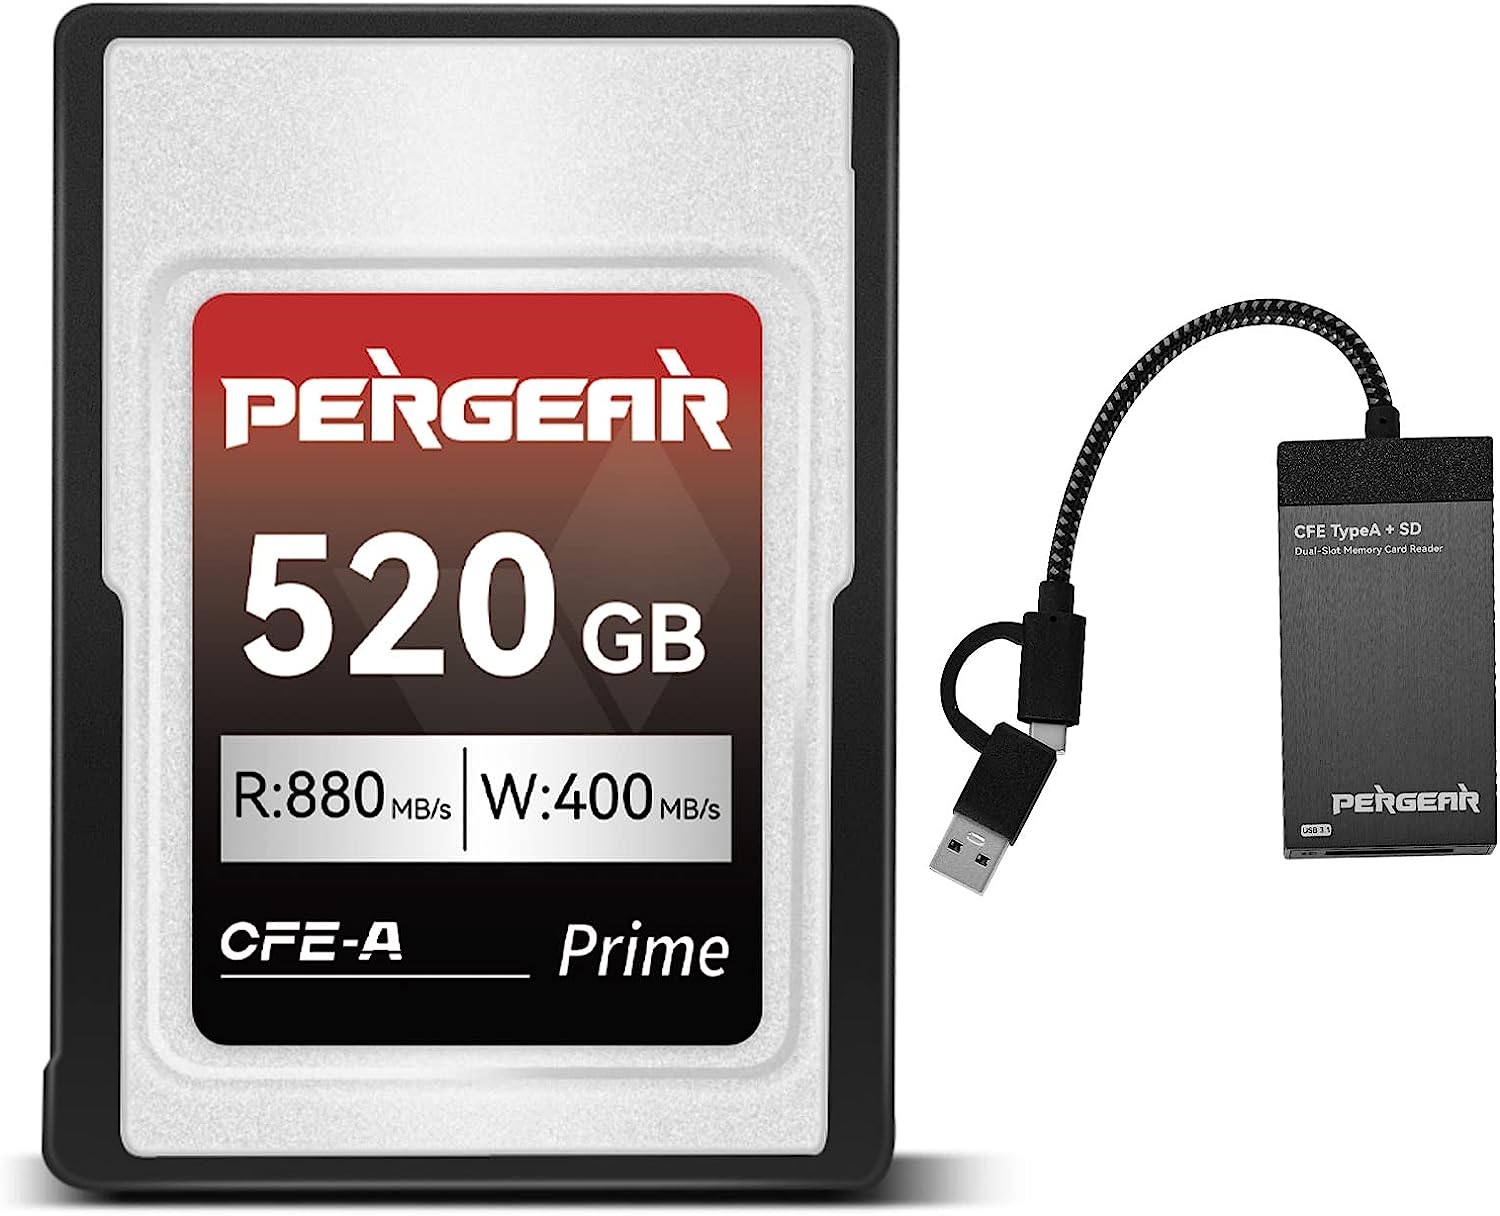 Dual-Slot CFast & SD Memory Card Reader